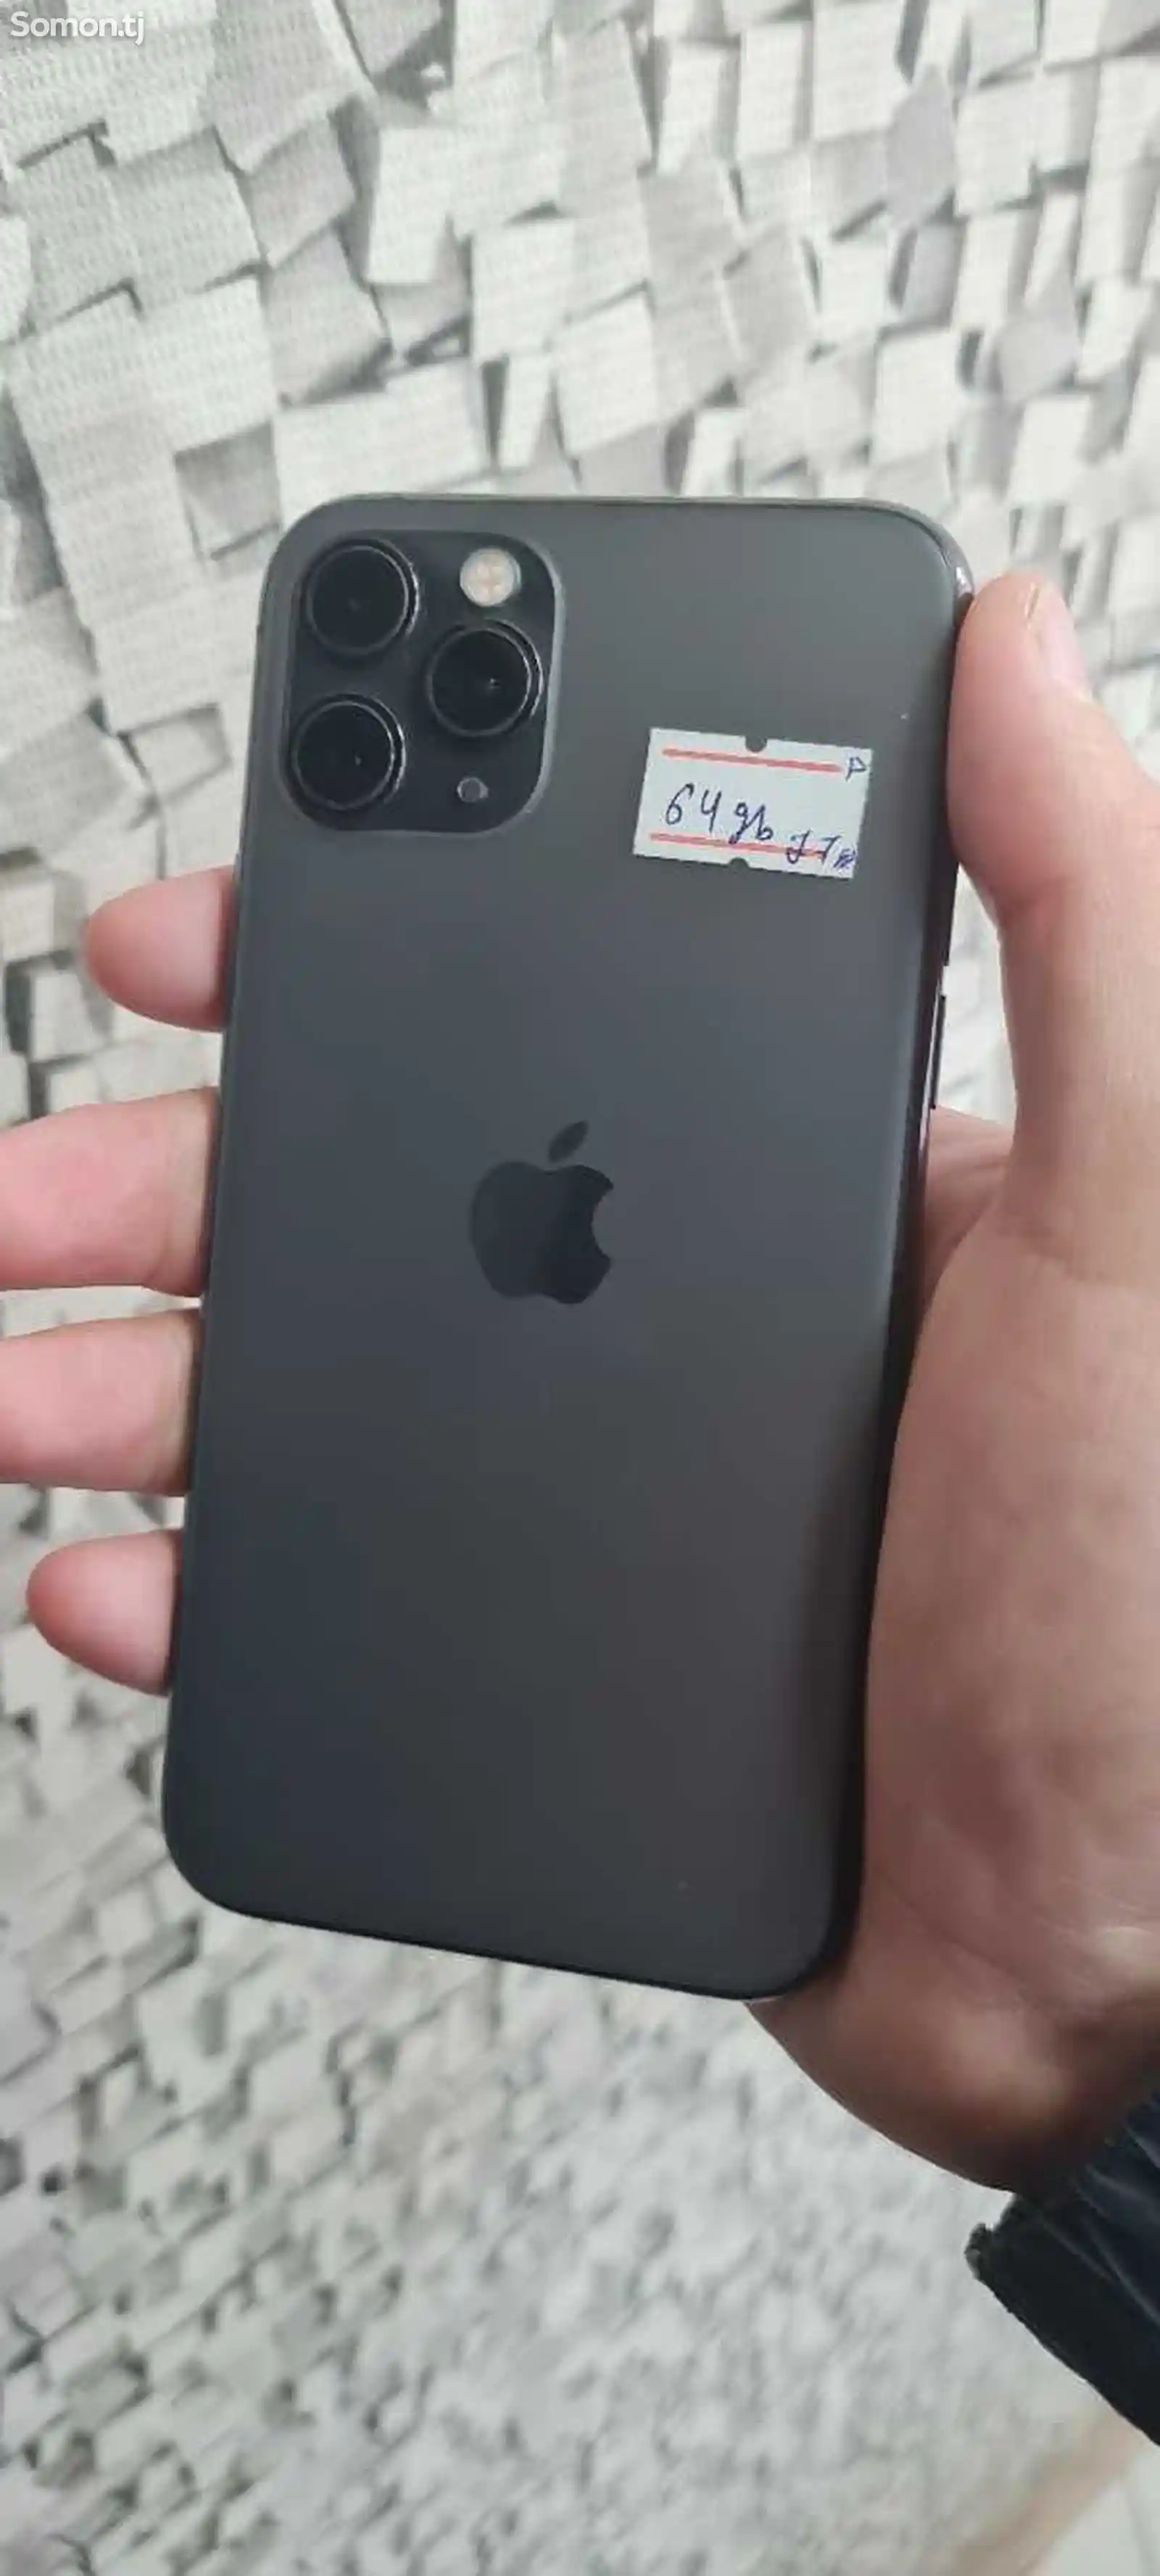 Apple iPhone 11 Pro, 64 gb, Space Grey